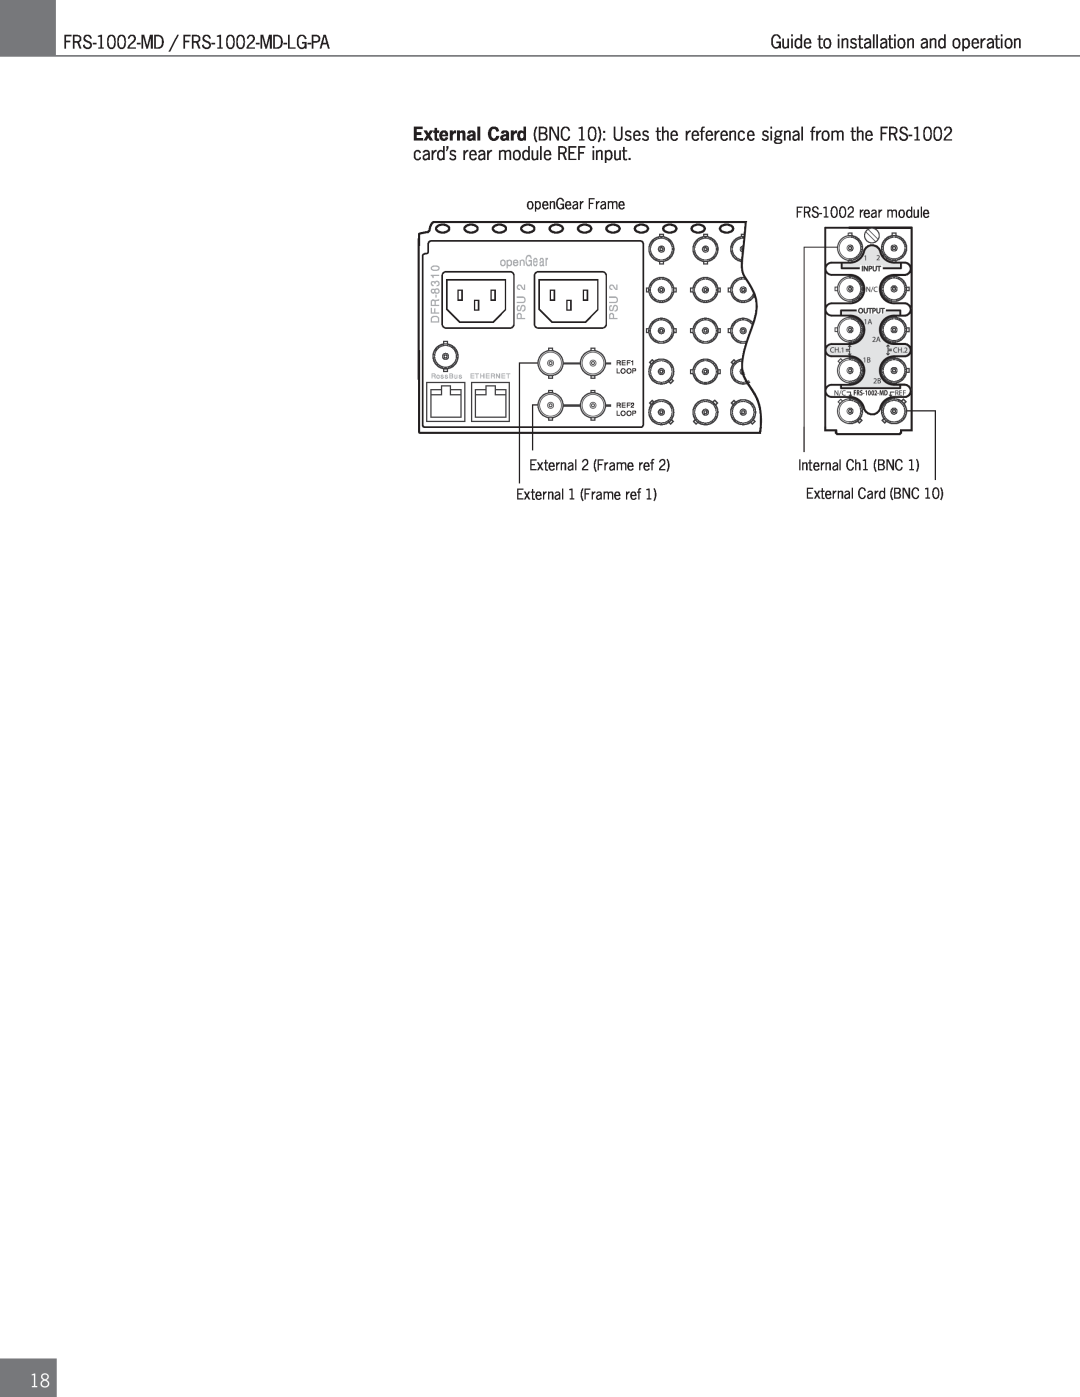 Algolith FRS-1002-MD operation manual DFR-8310, openGear, External Card BNC, REF1, RossBus, Ethernet, Loop, REF2 